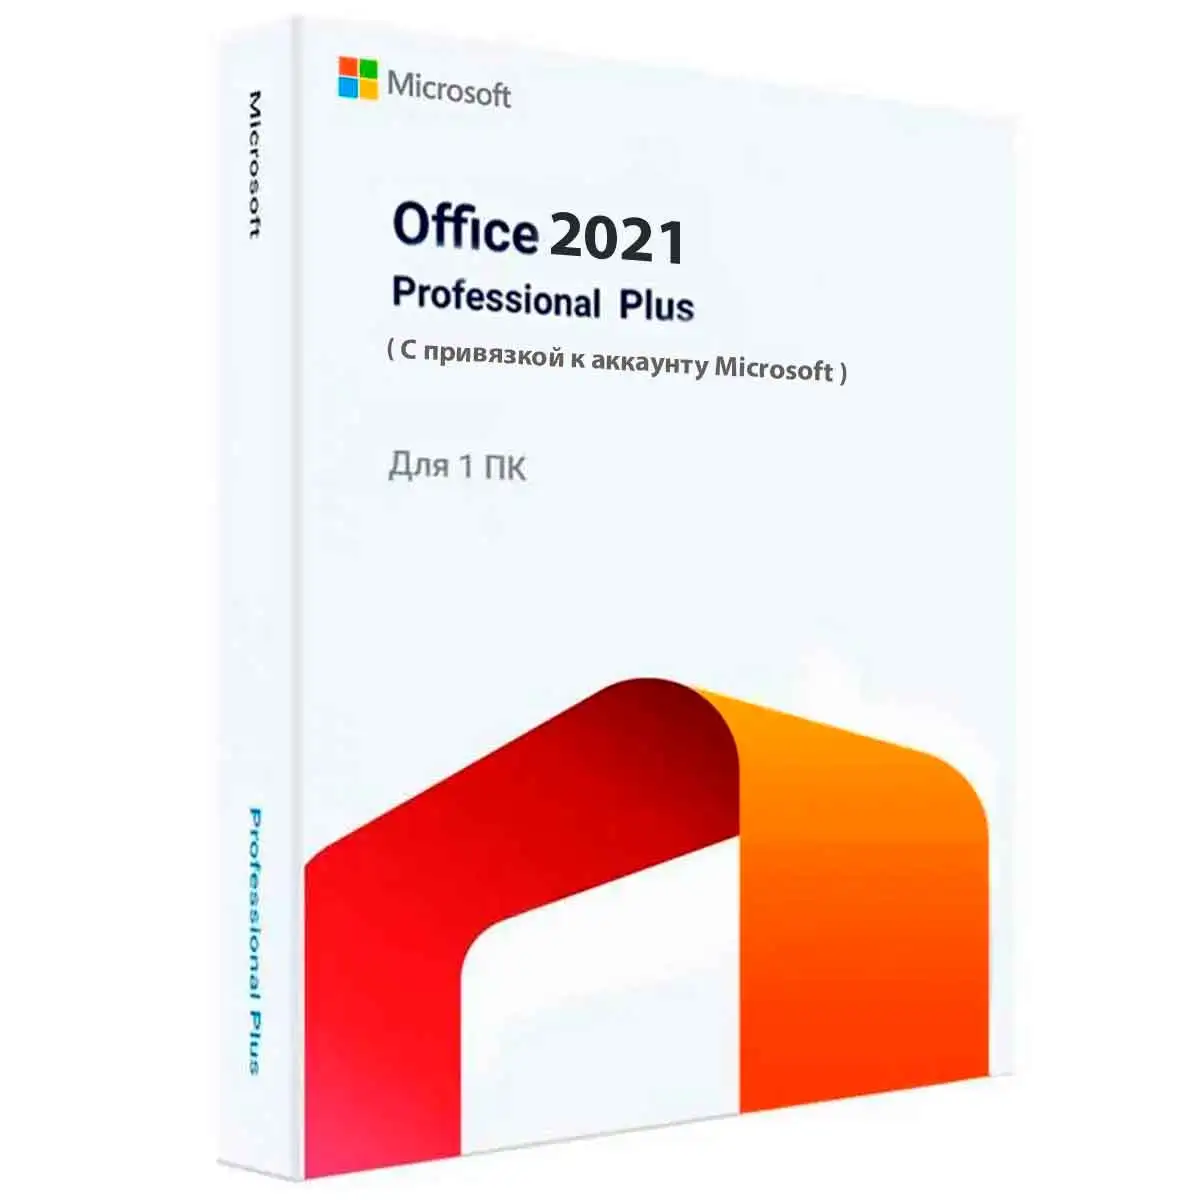 Microsoft Office 2021 Professional Plus Bind с привязкой к аккаунту